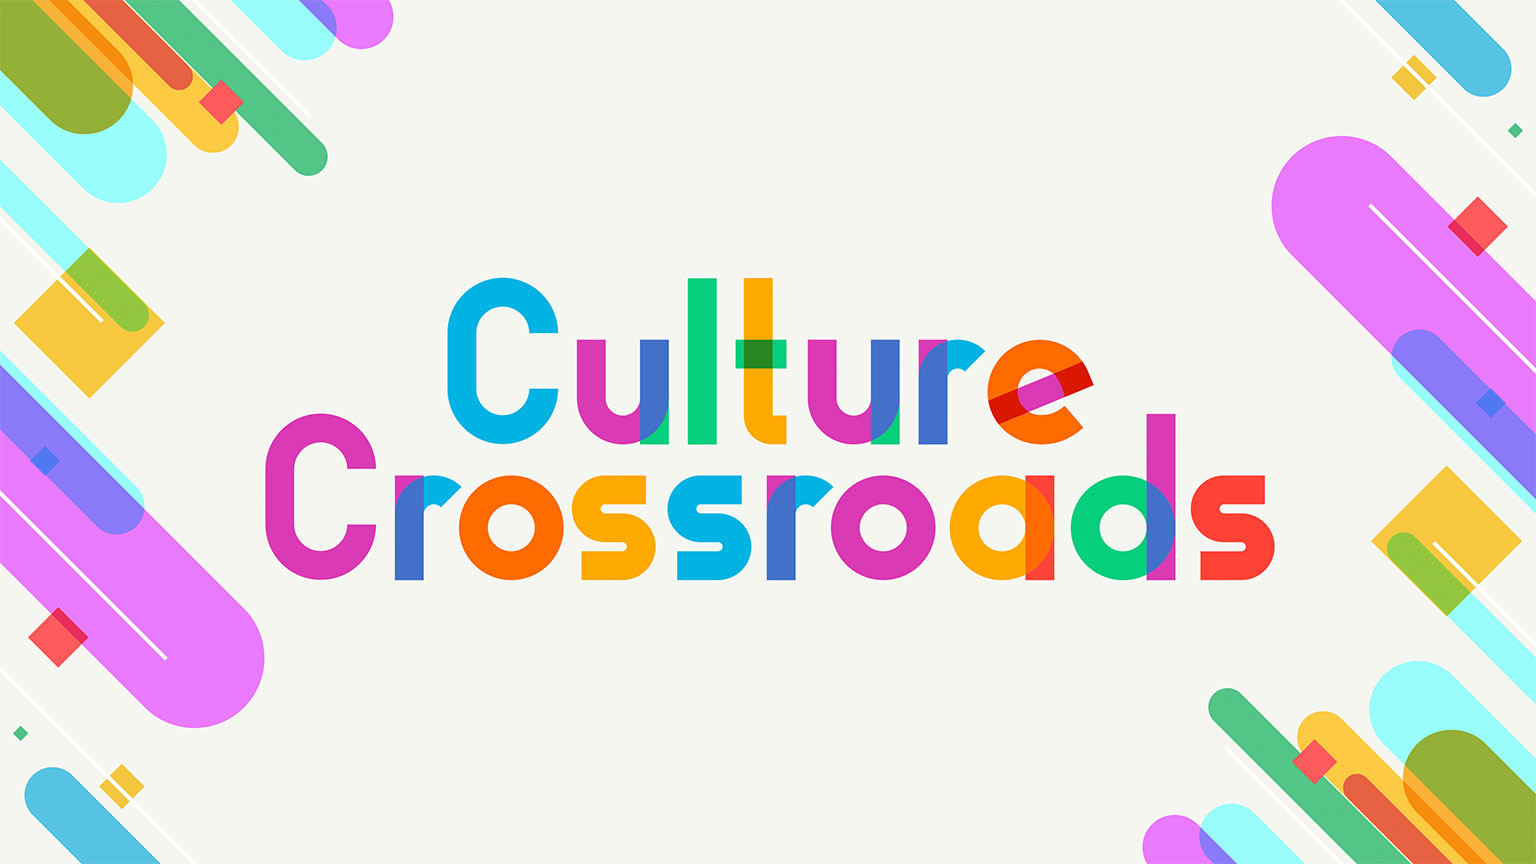 Giao lộ văn hóa
Culture Crossroads